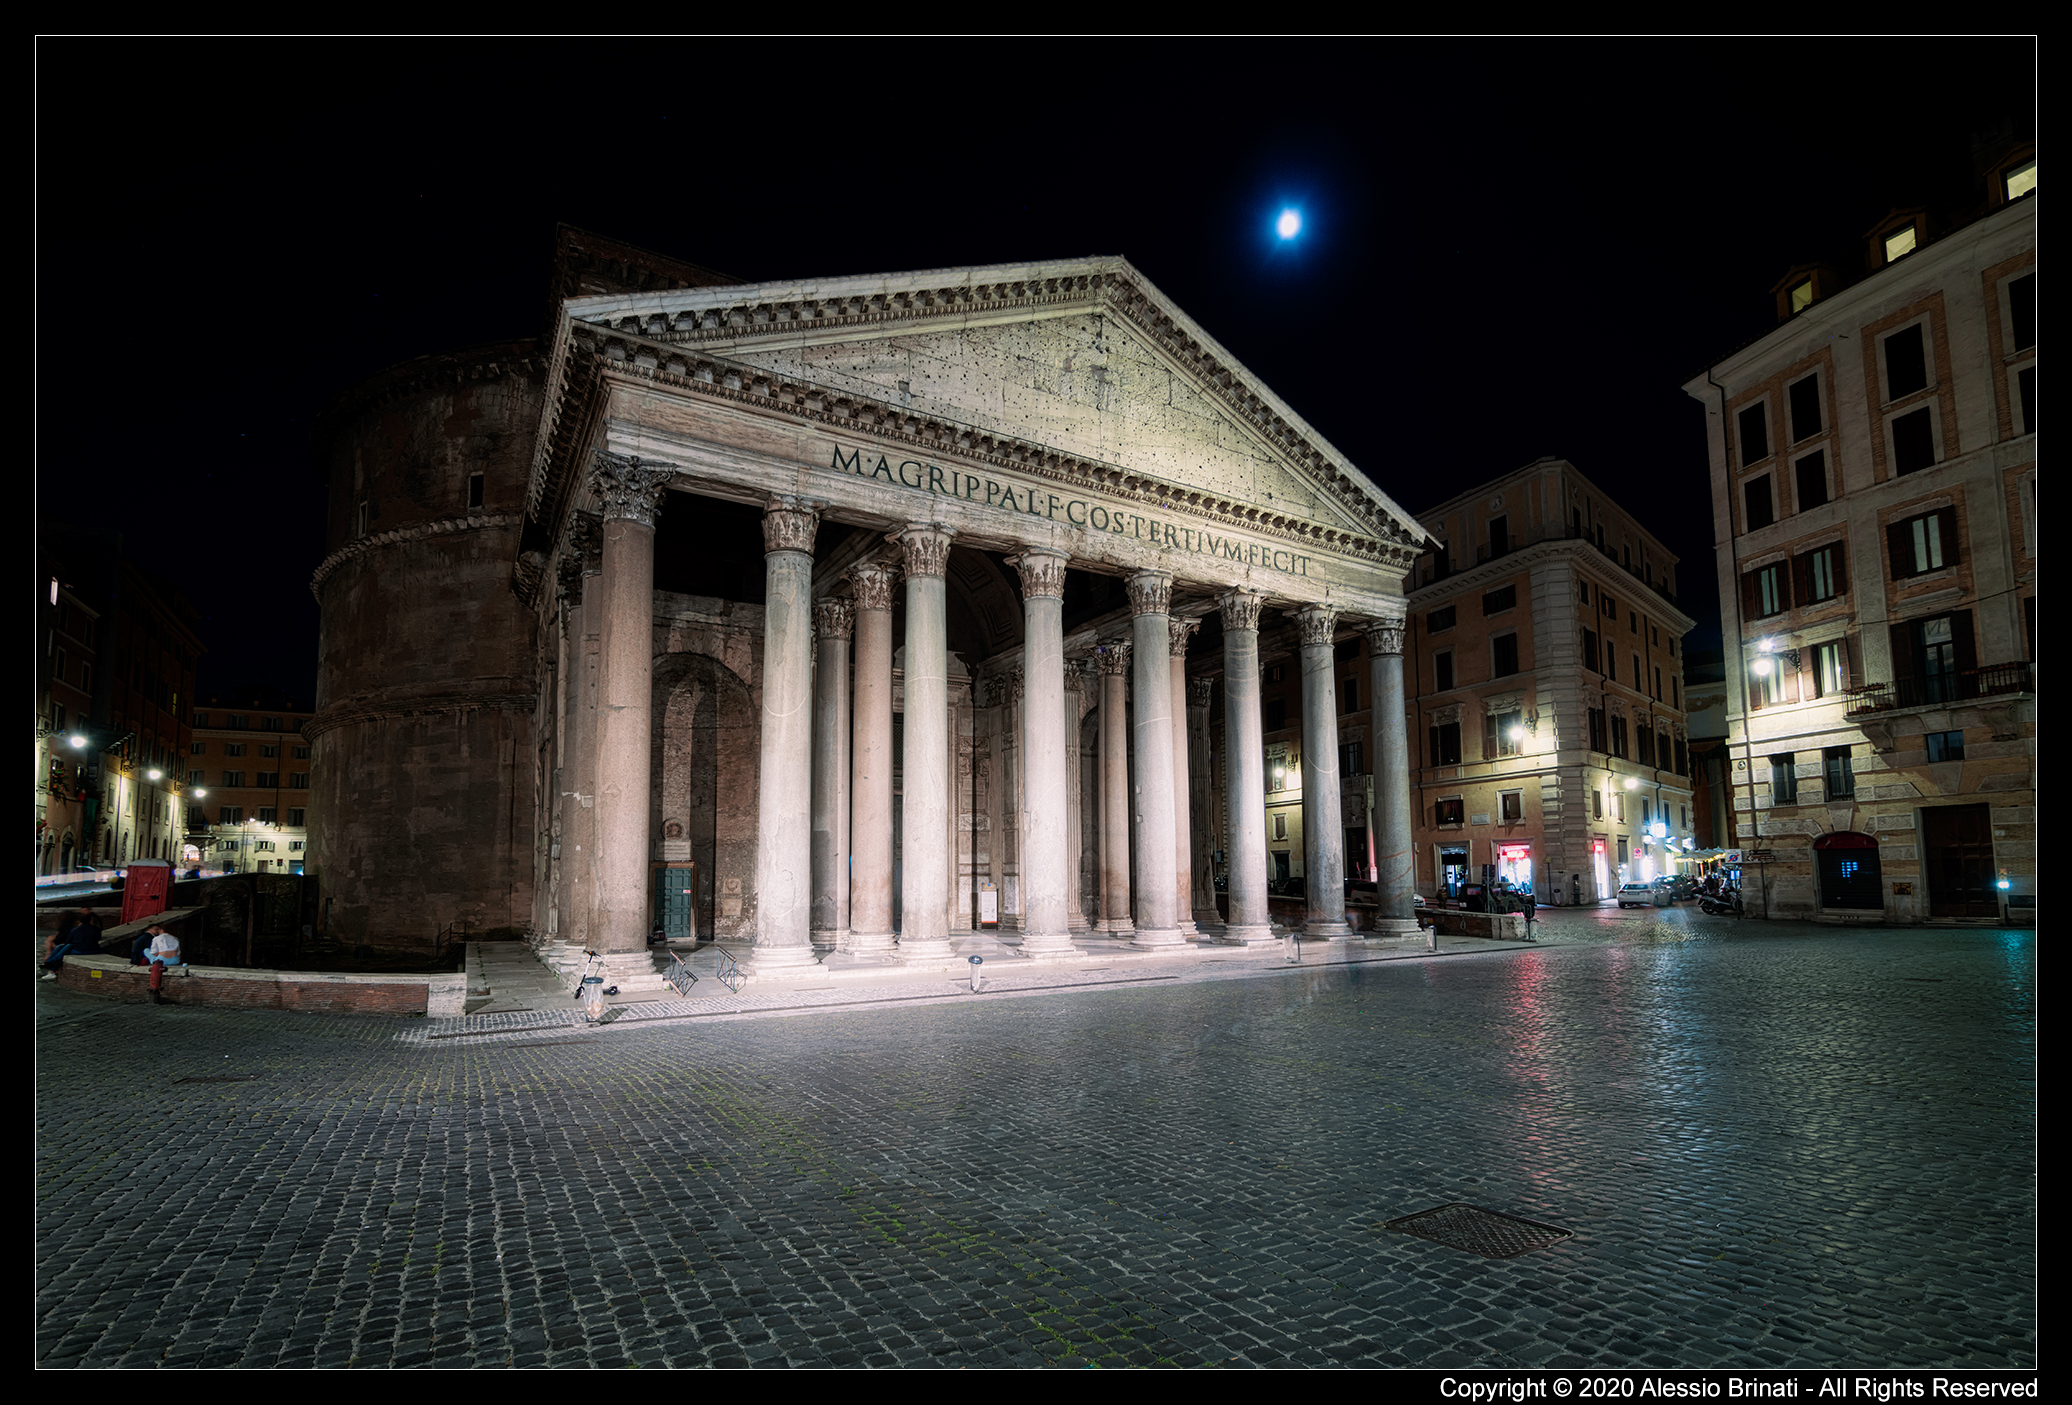 The Pantheon...